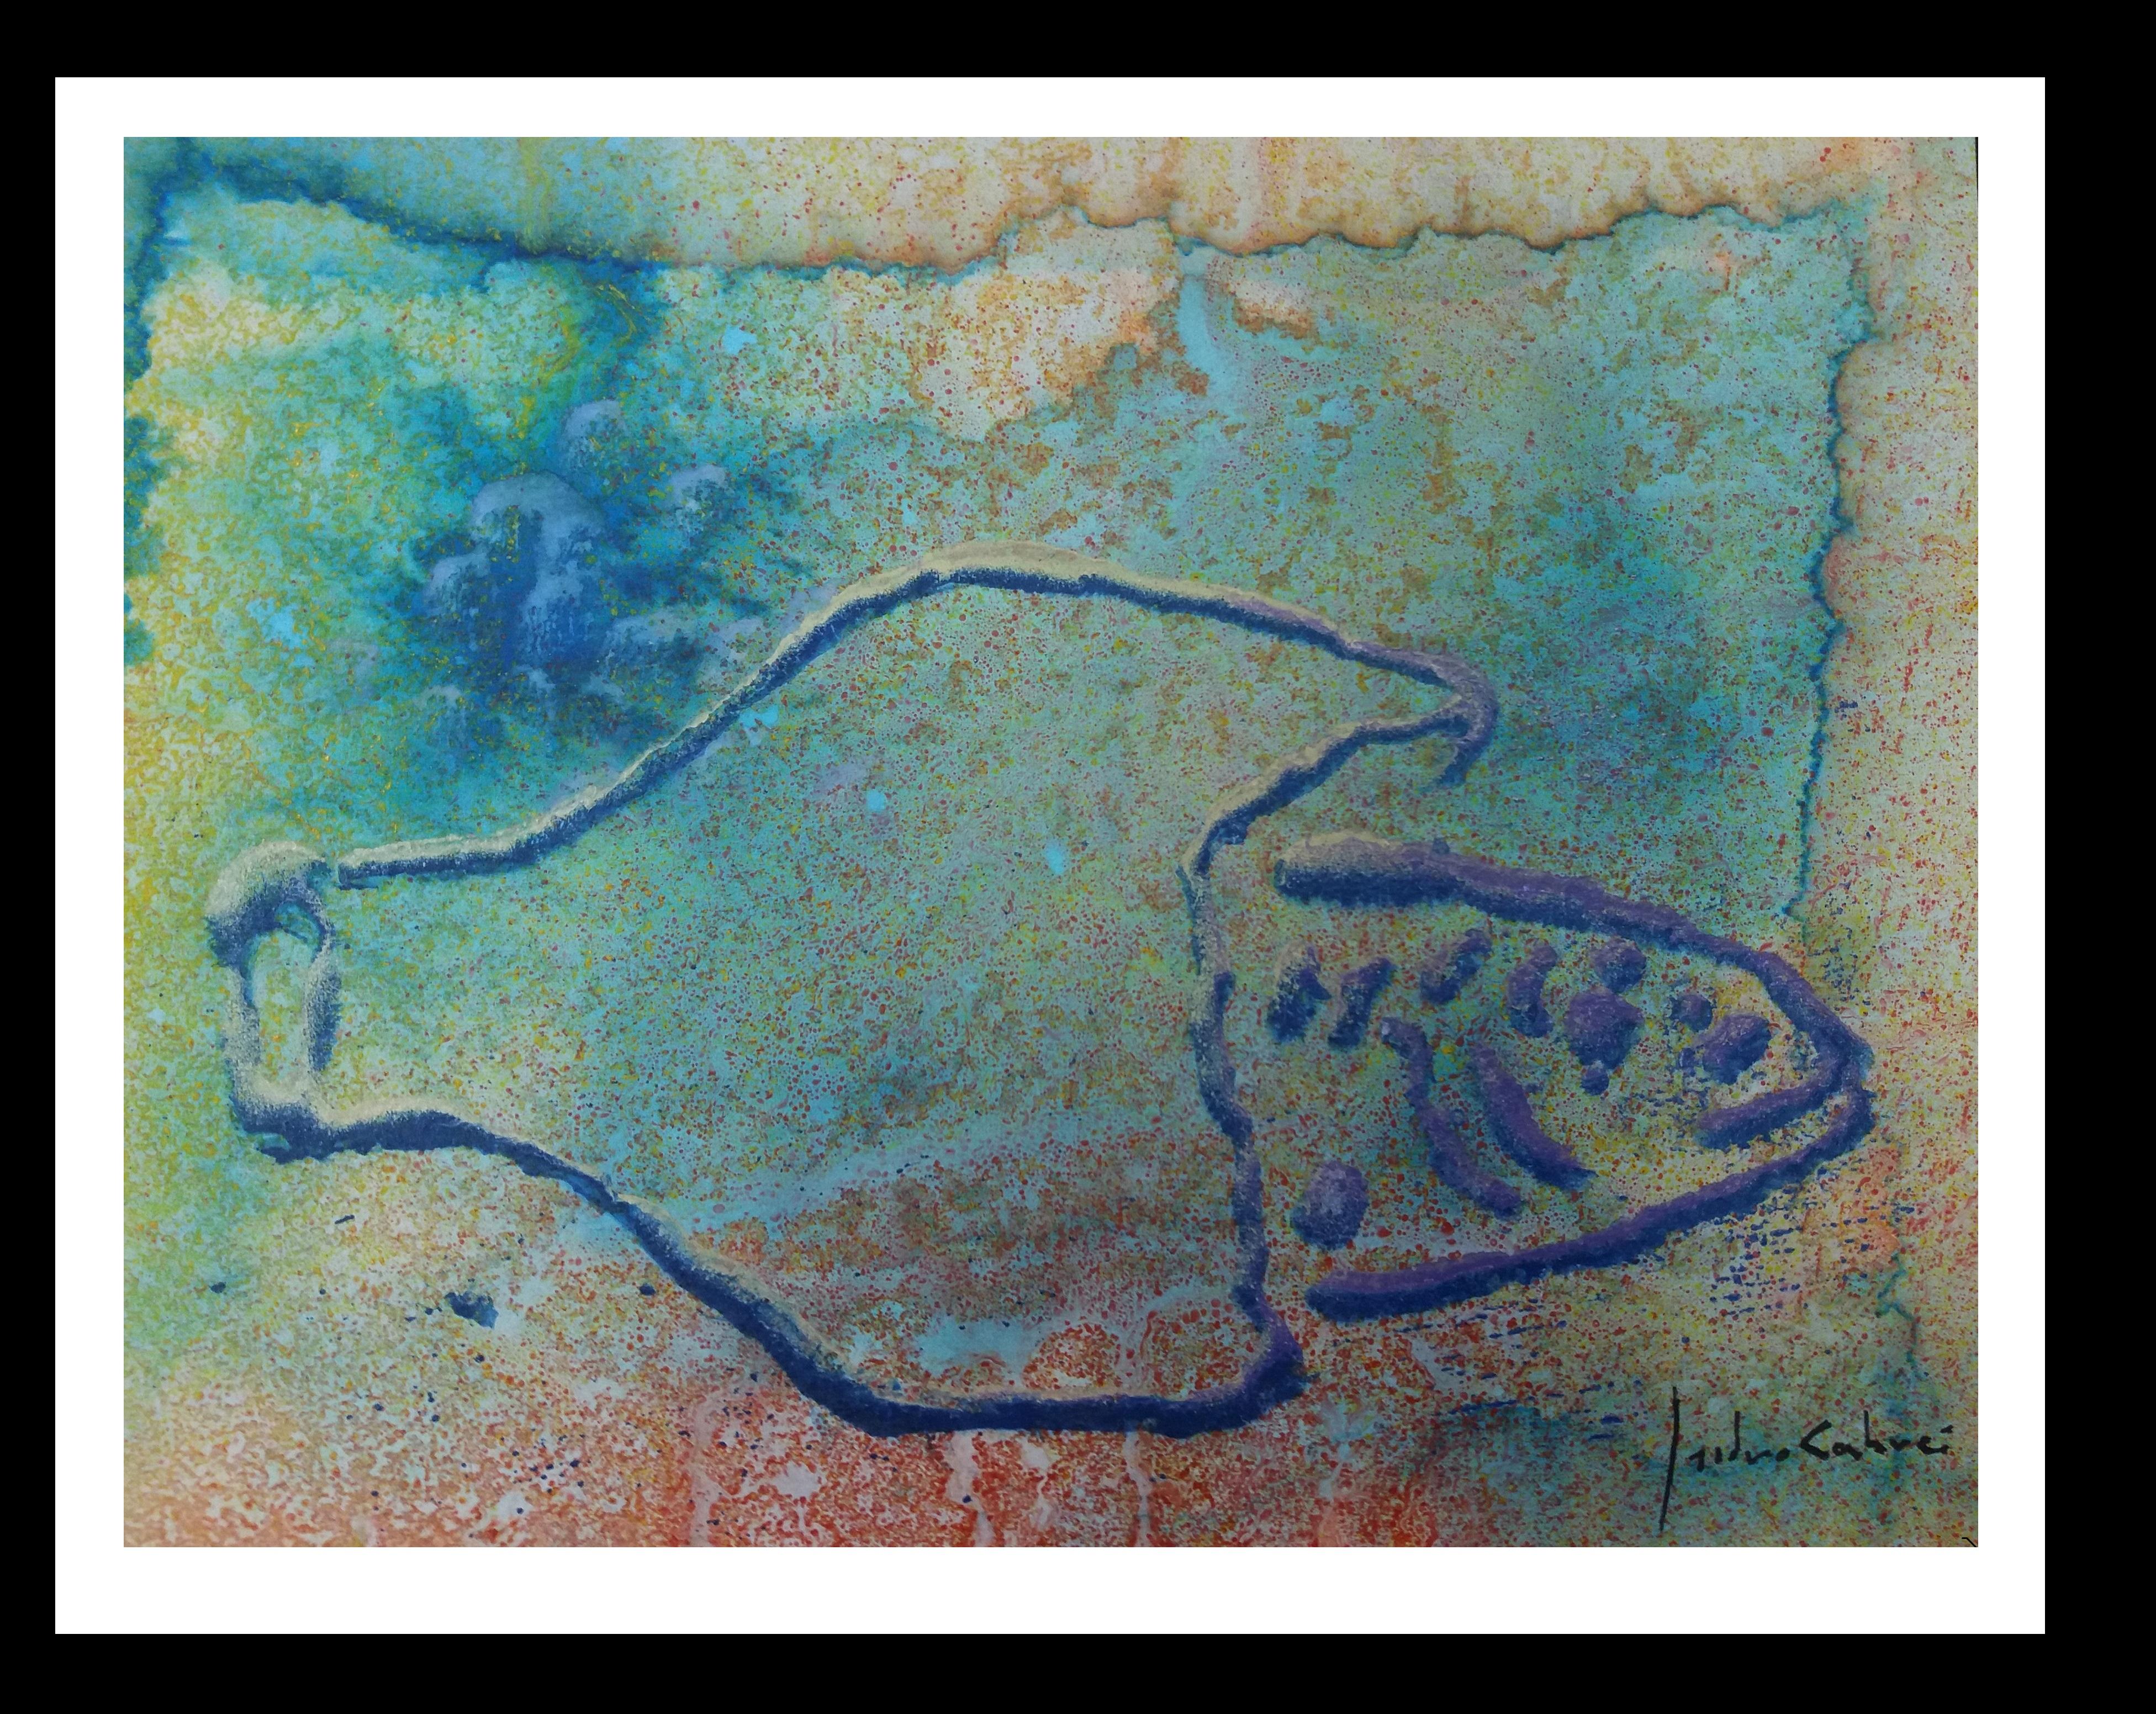  Cahue    effect poisson original abstraite peinture sur papier acrylique - Painting de Isidro Cahue